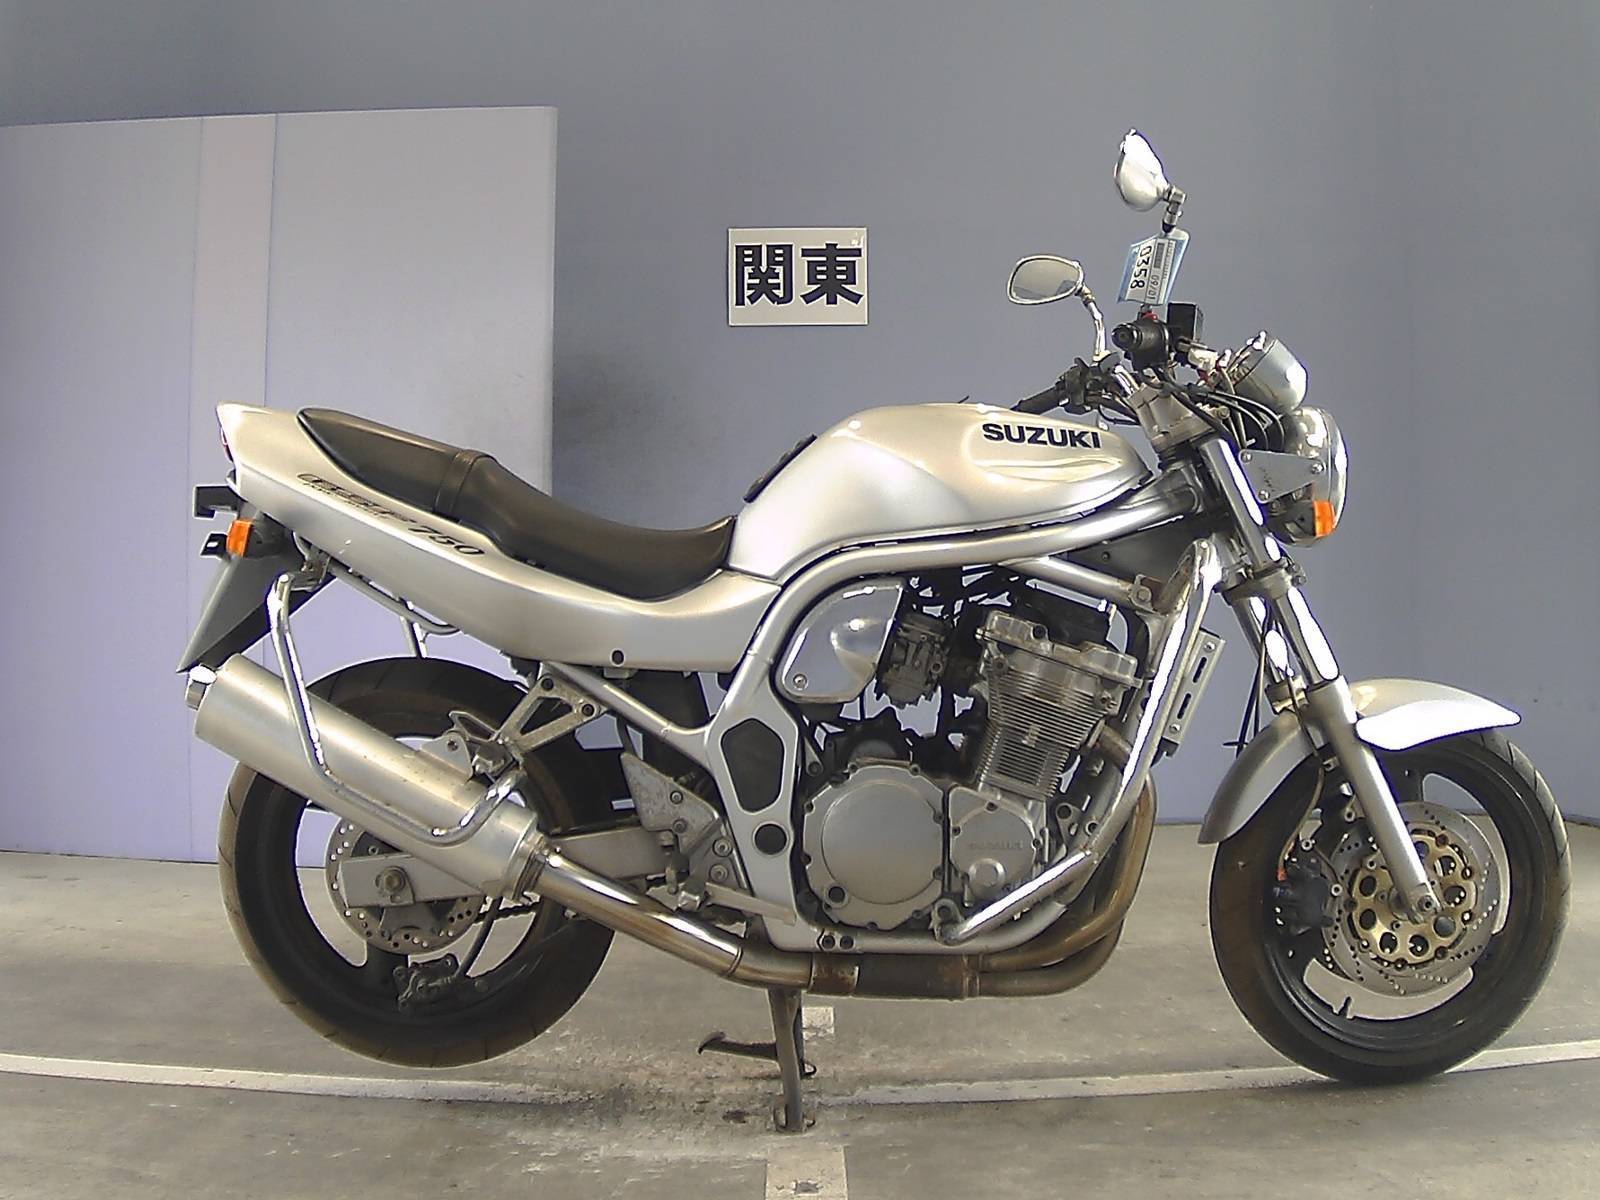 Suzuki bandit (сузуки бандит) gsf 400 технические характеристики и краткий обзор модели